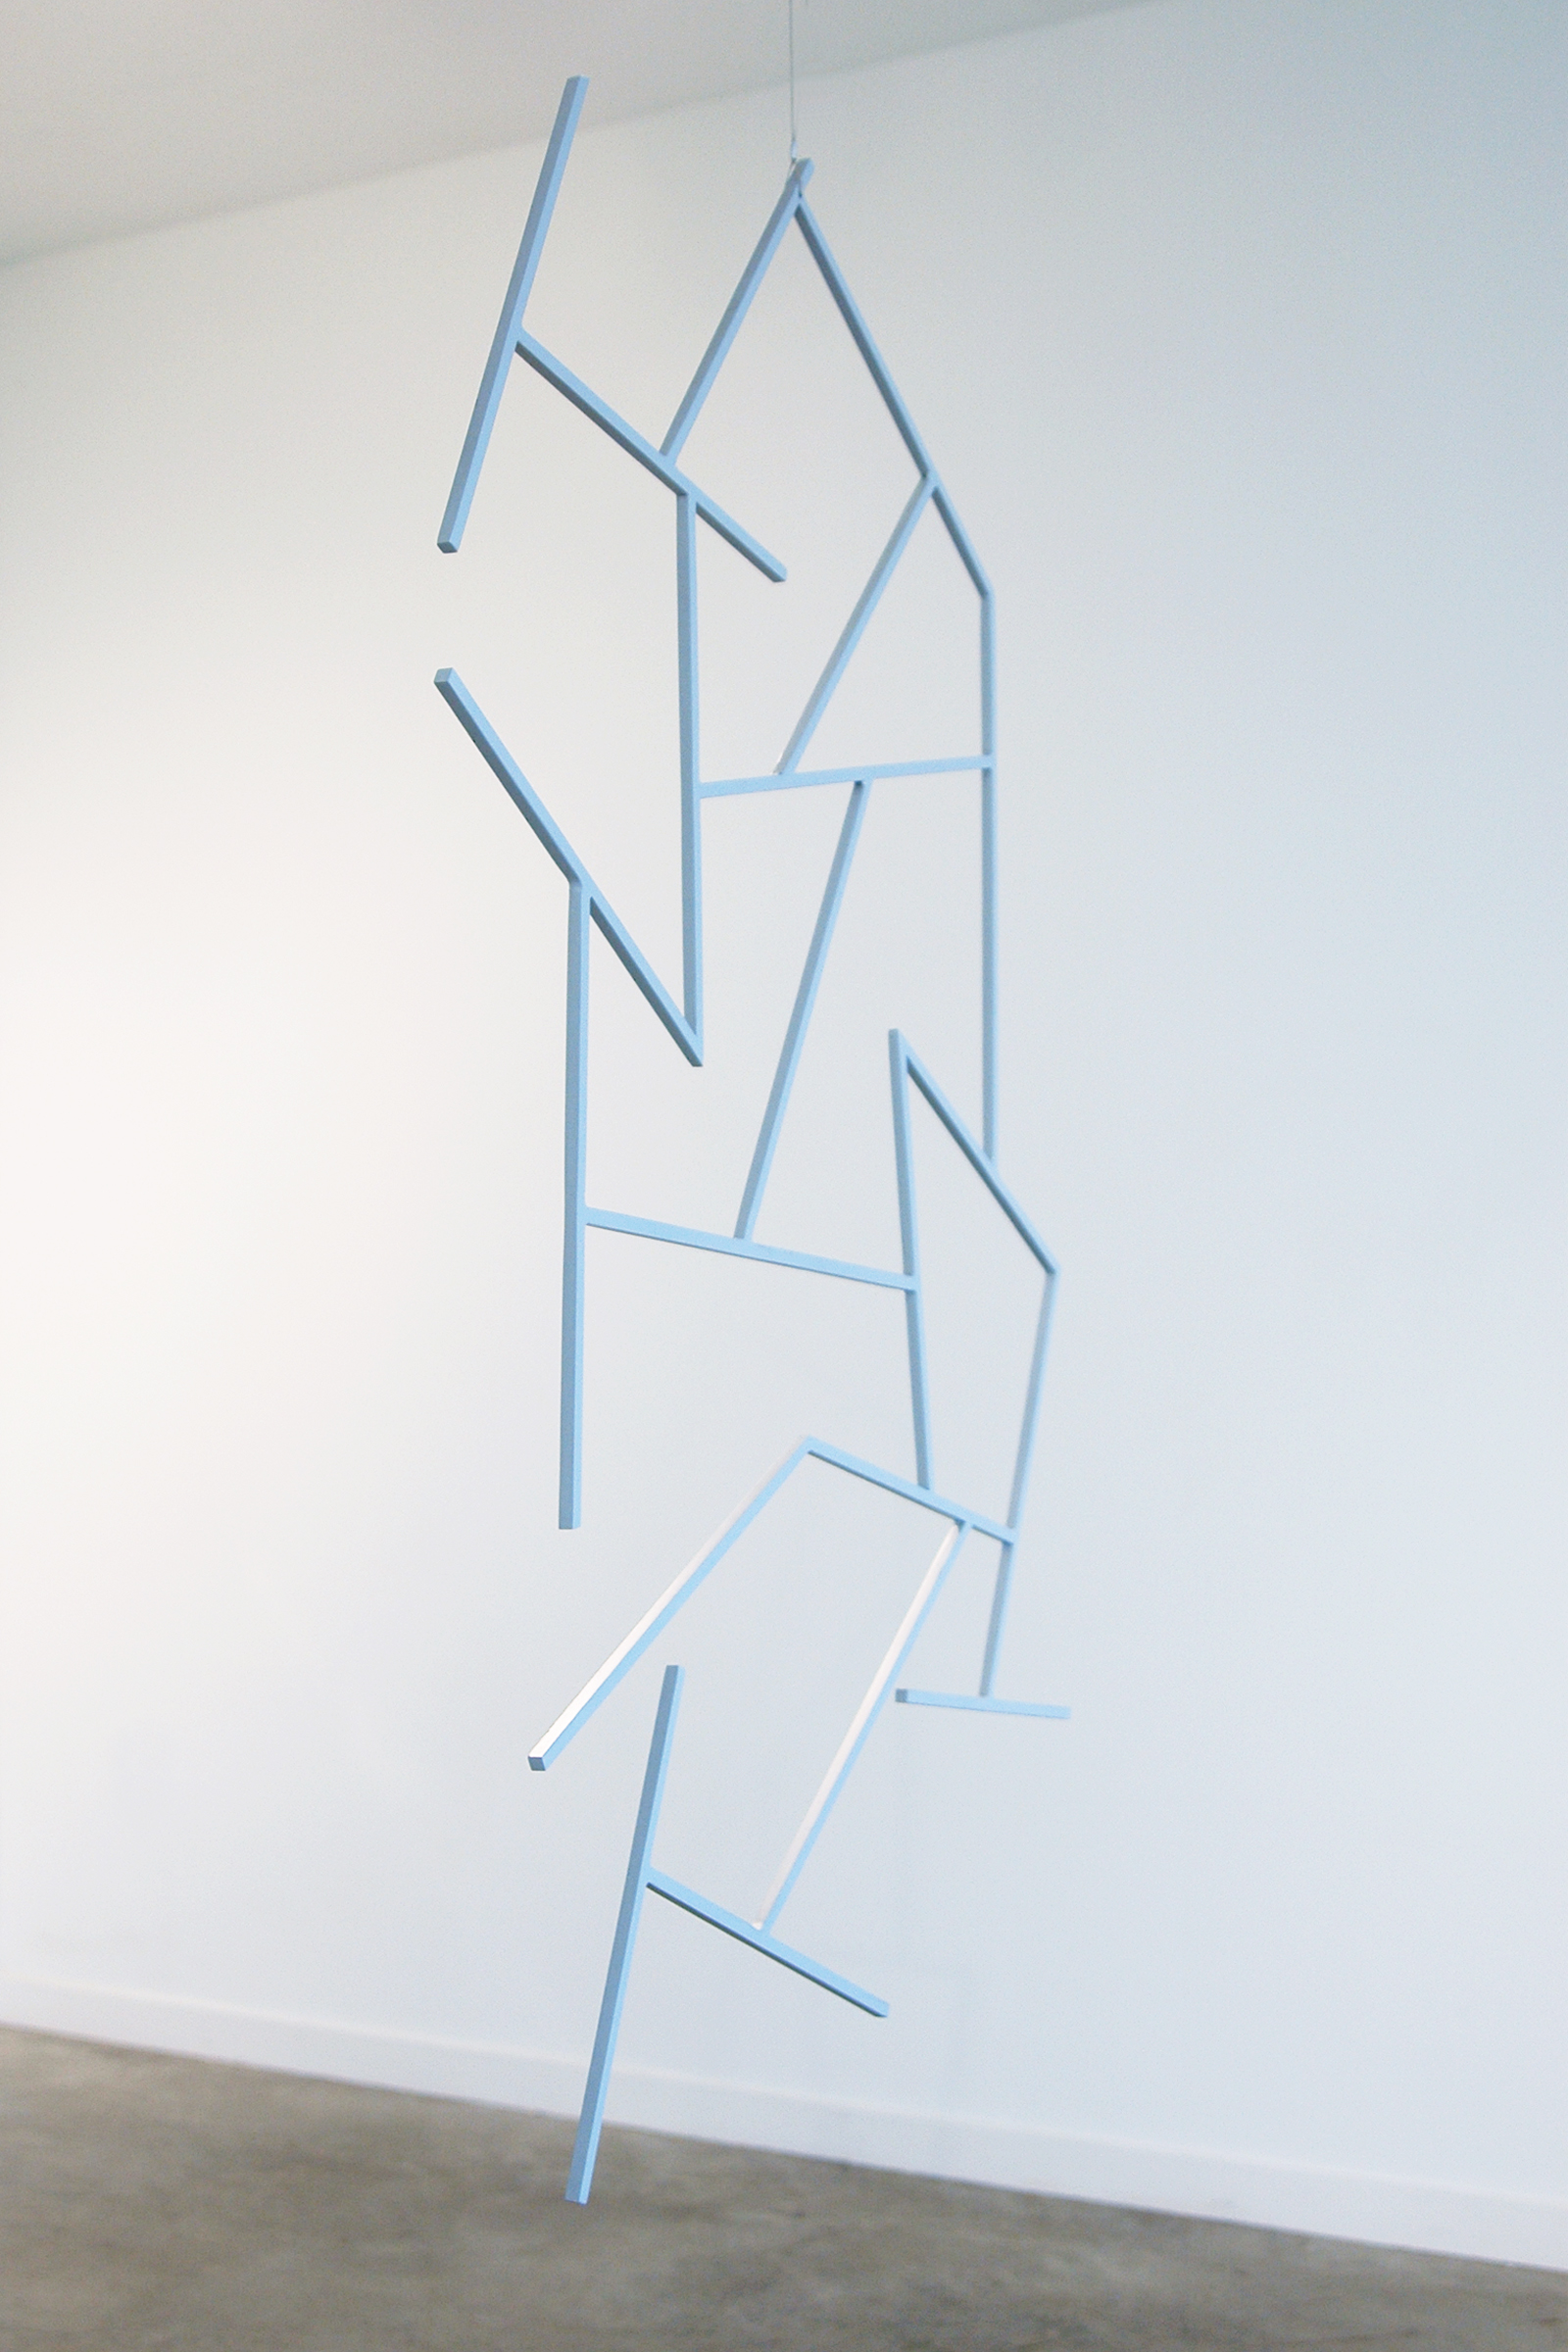   JONATHAN RUNCIO  (side view)&nbsp; Untitled (Impression) , steel and primer, 48.5" x 35", 2013 